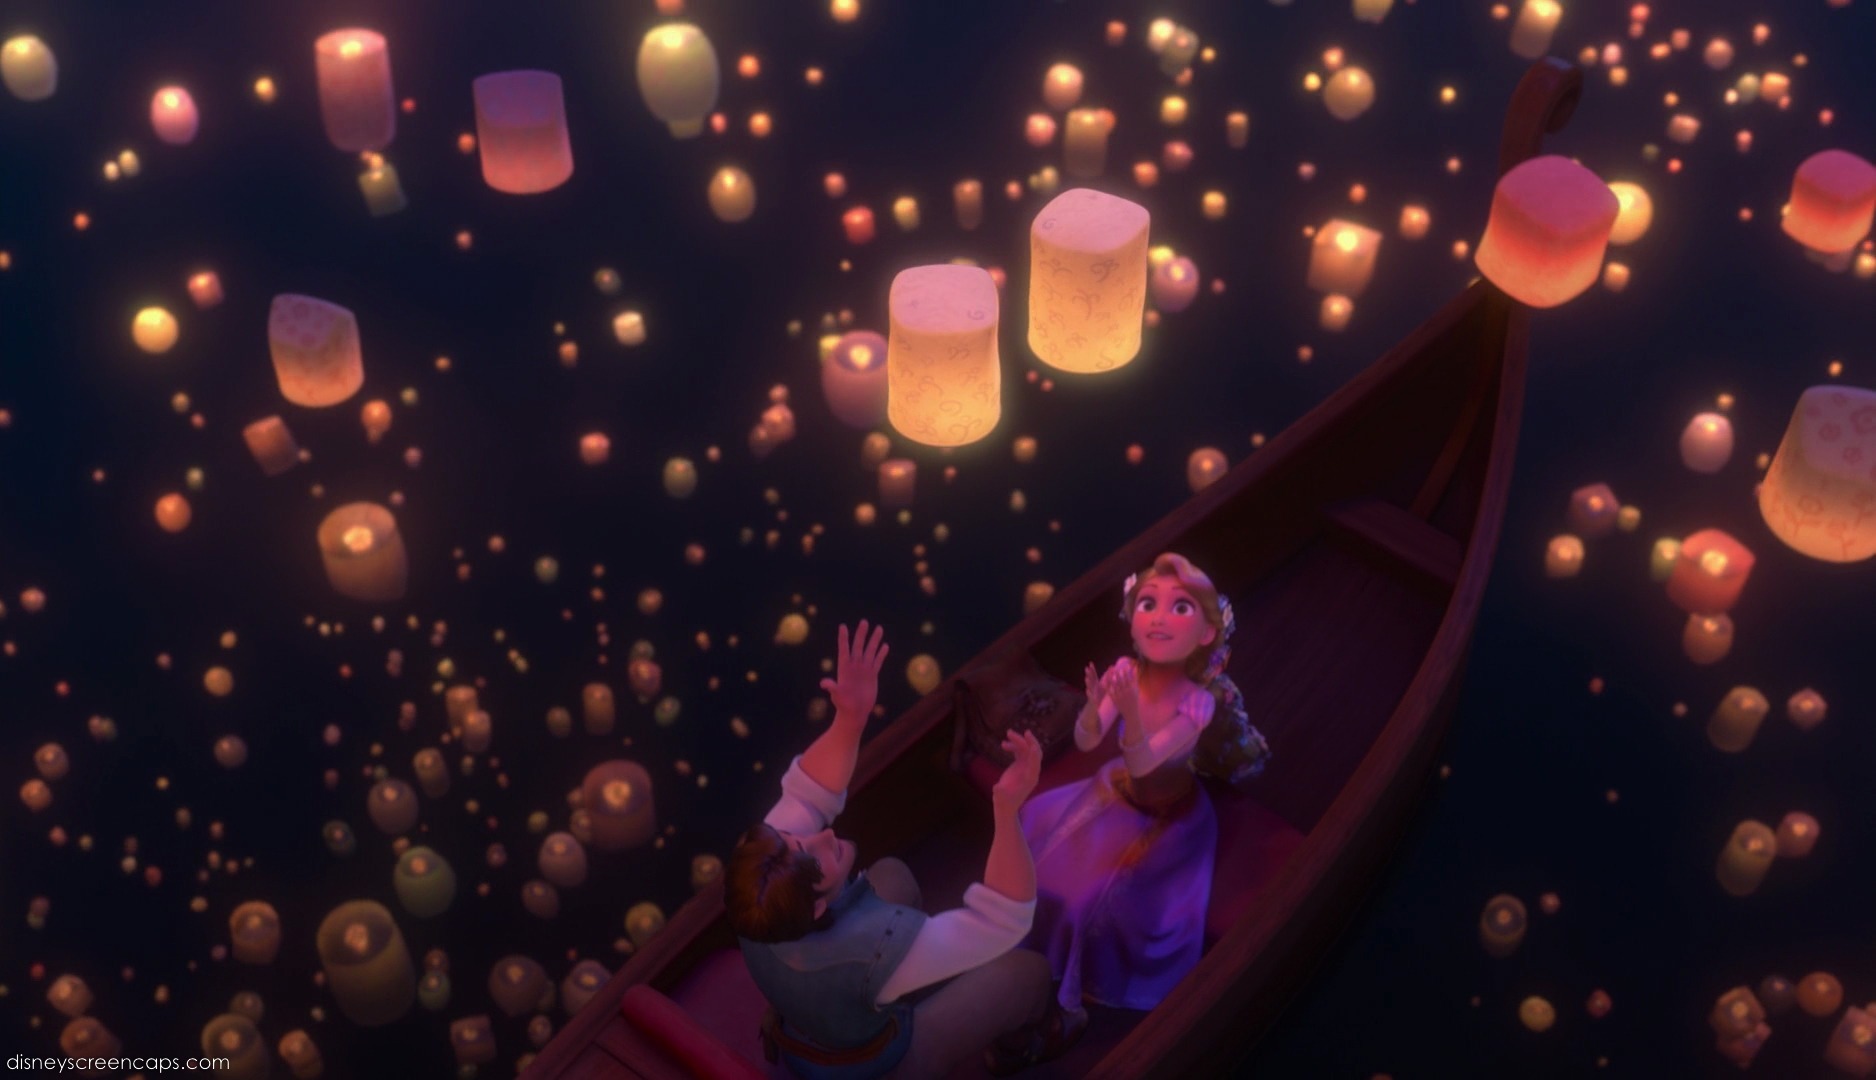 Did anda find the lantern scene romantic? poling Results - rapunzel dan fly...